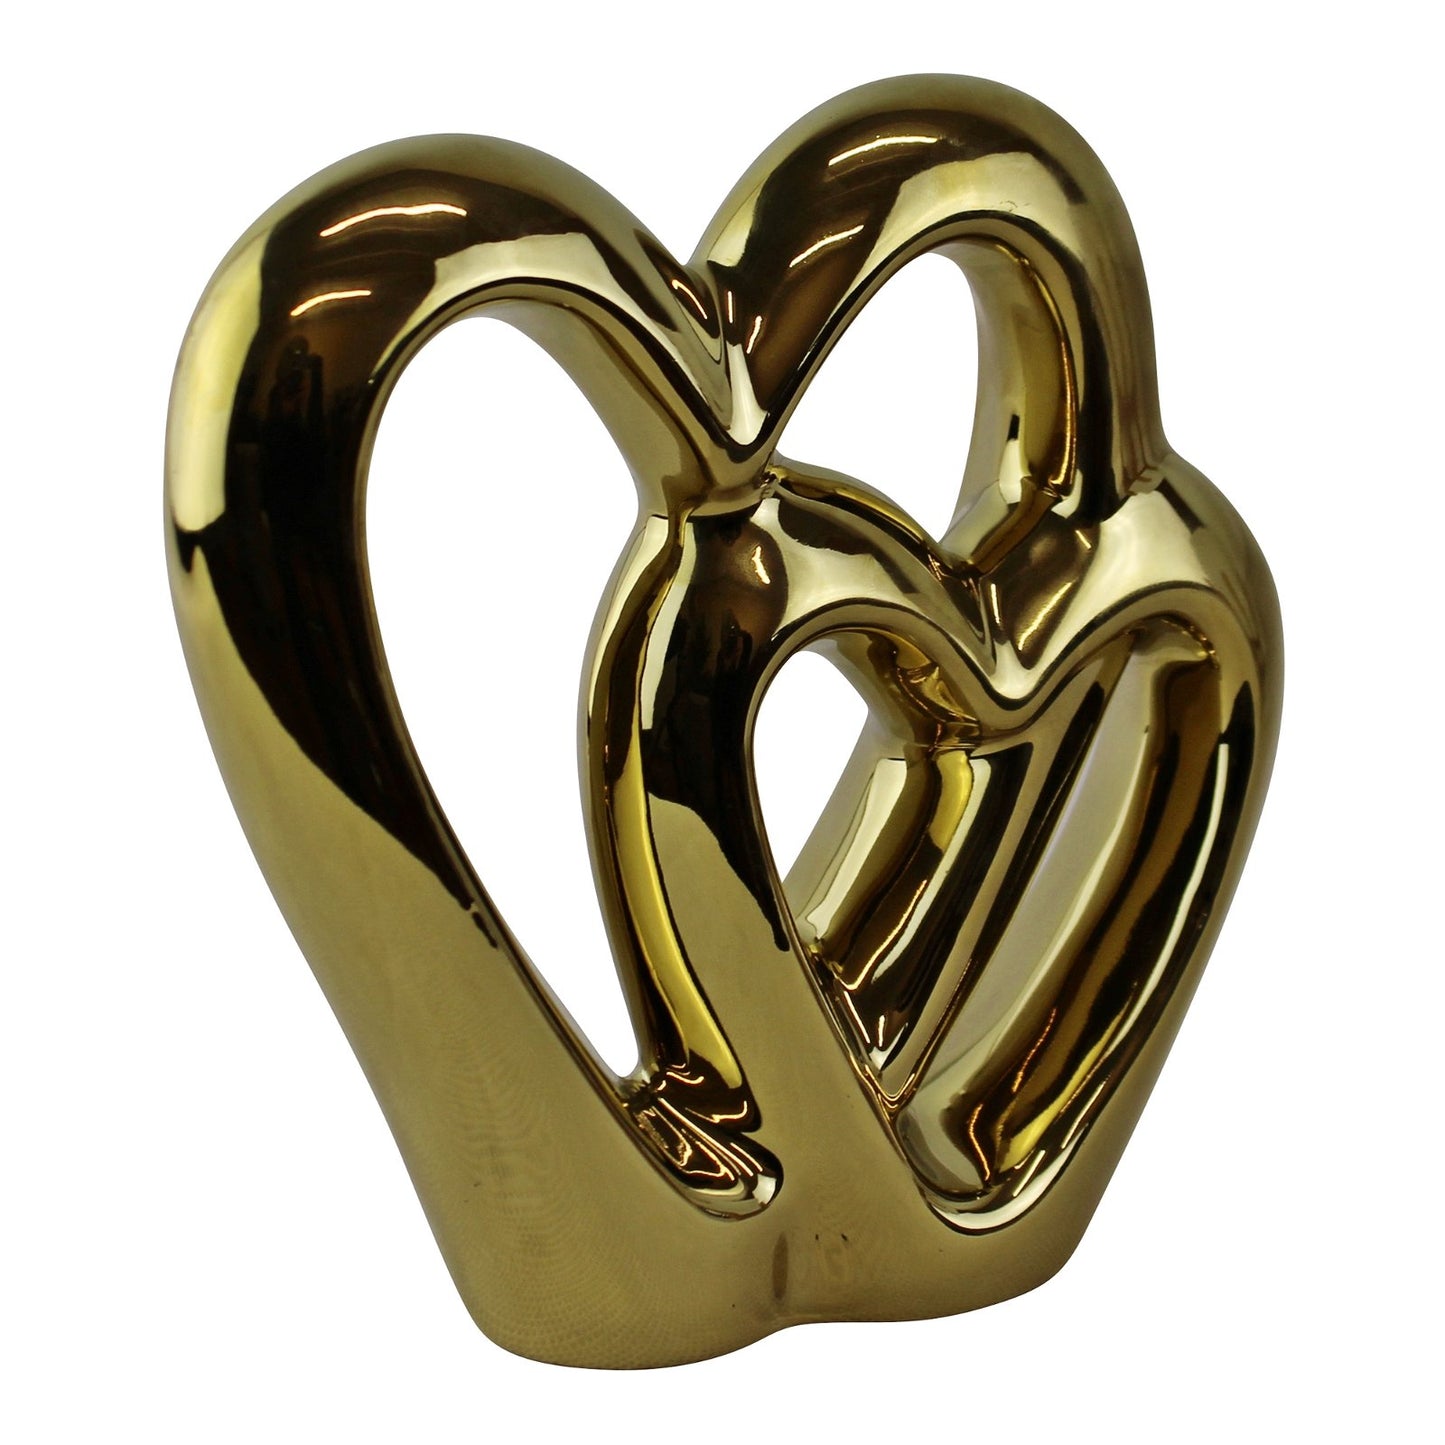 Gold Double Heart Ornament, 15cm.